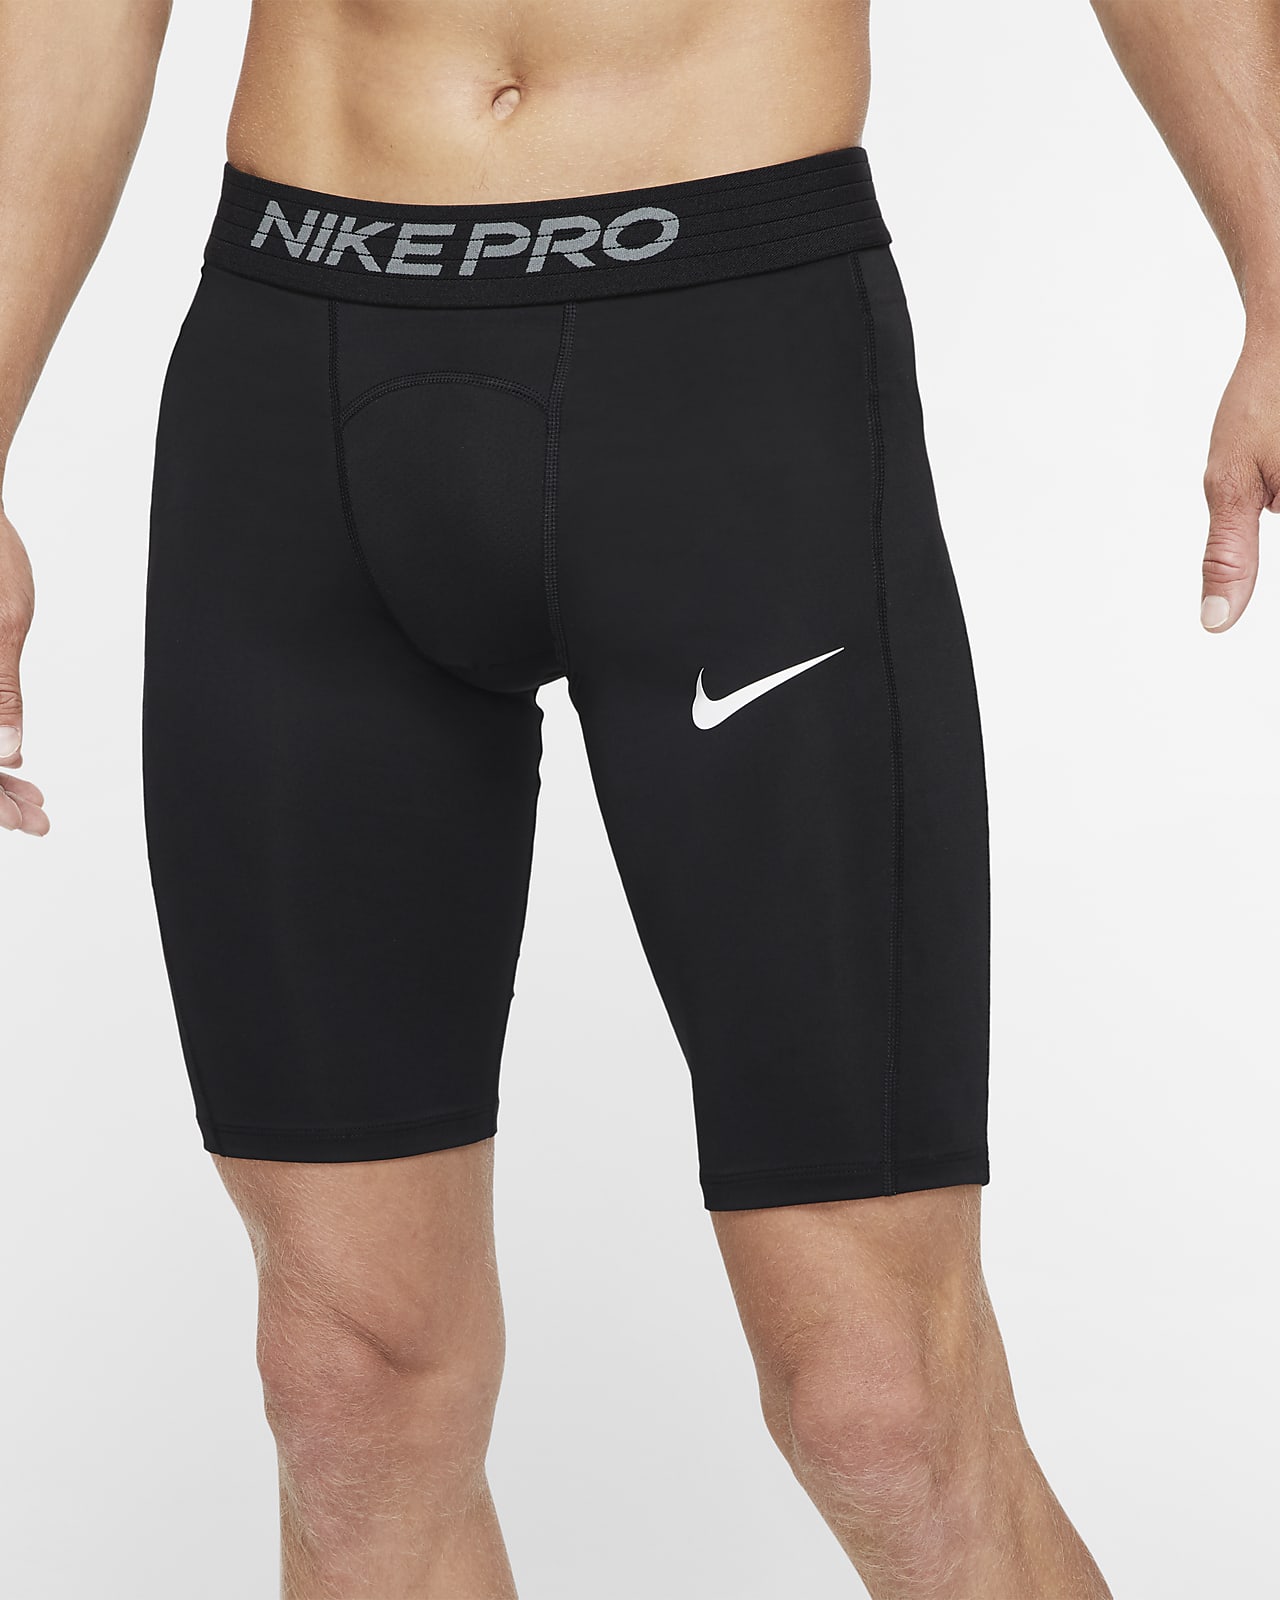 do nike pro shorts run small